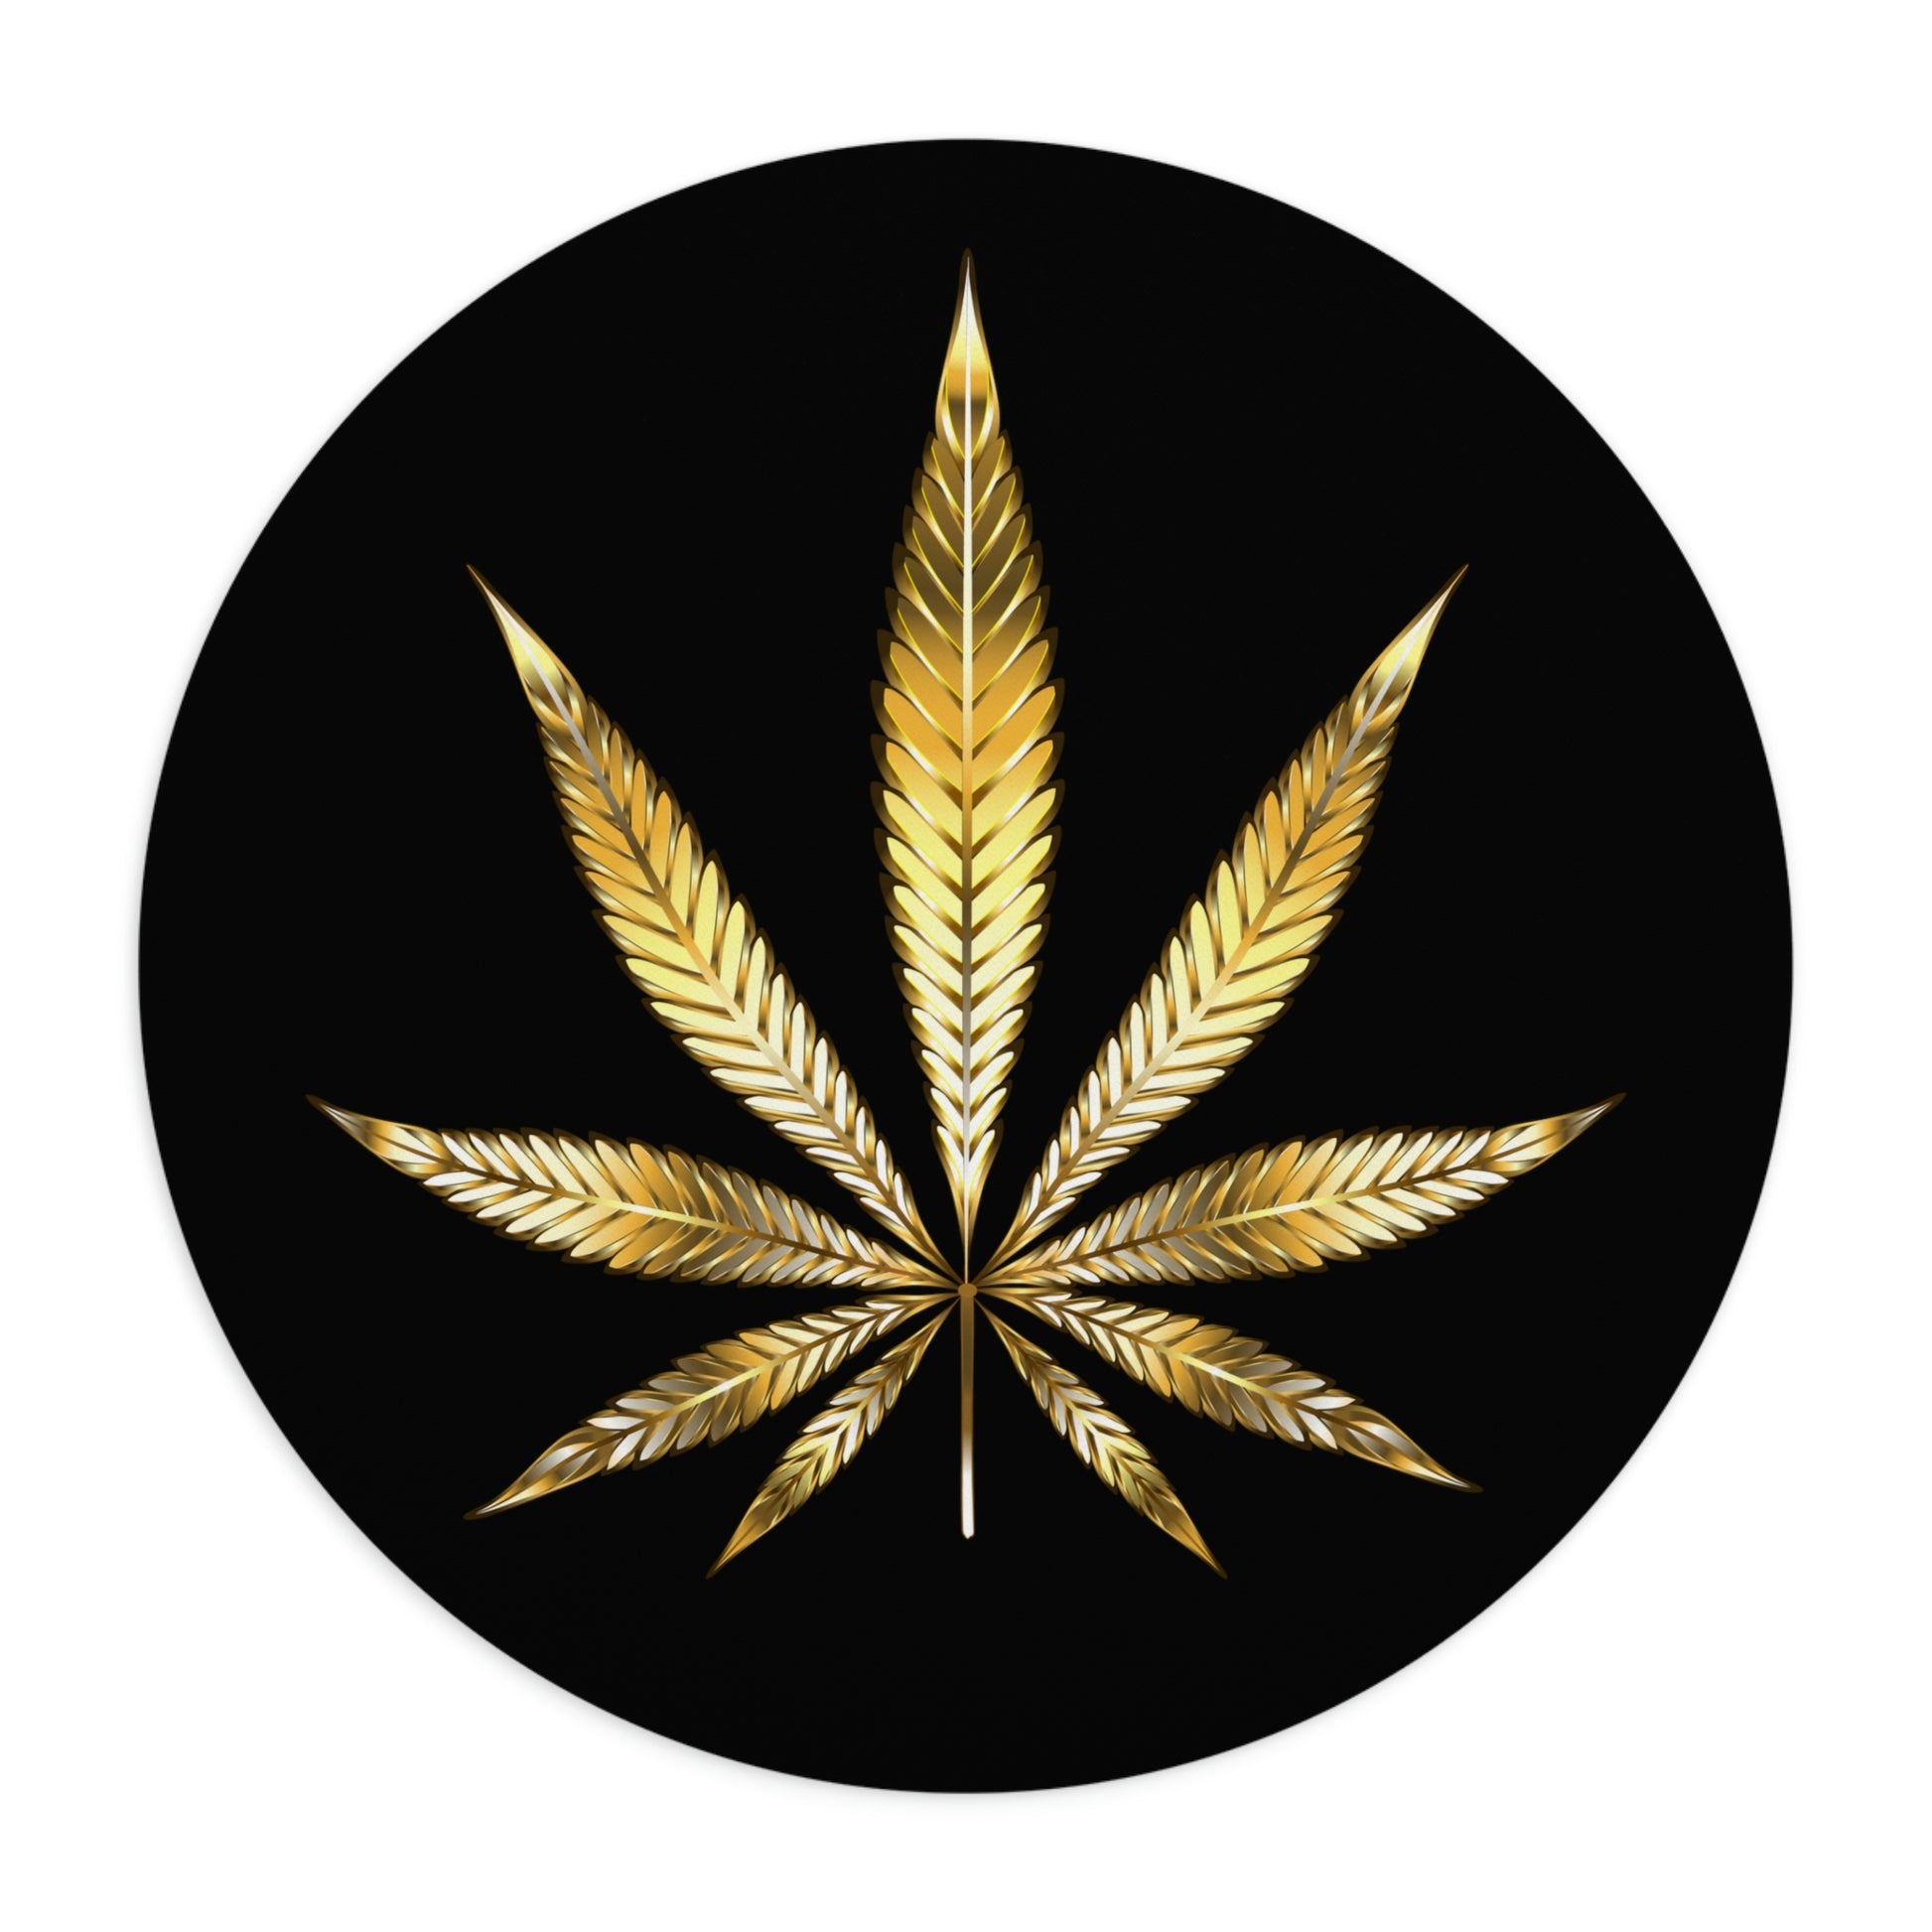 a Gold Marijuana Leaf Mouse Pad on a black background.